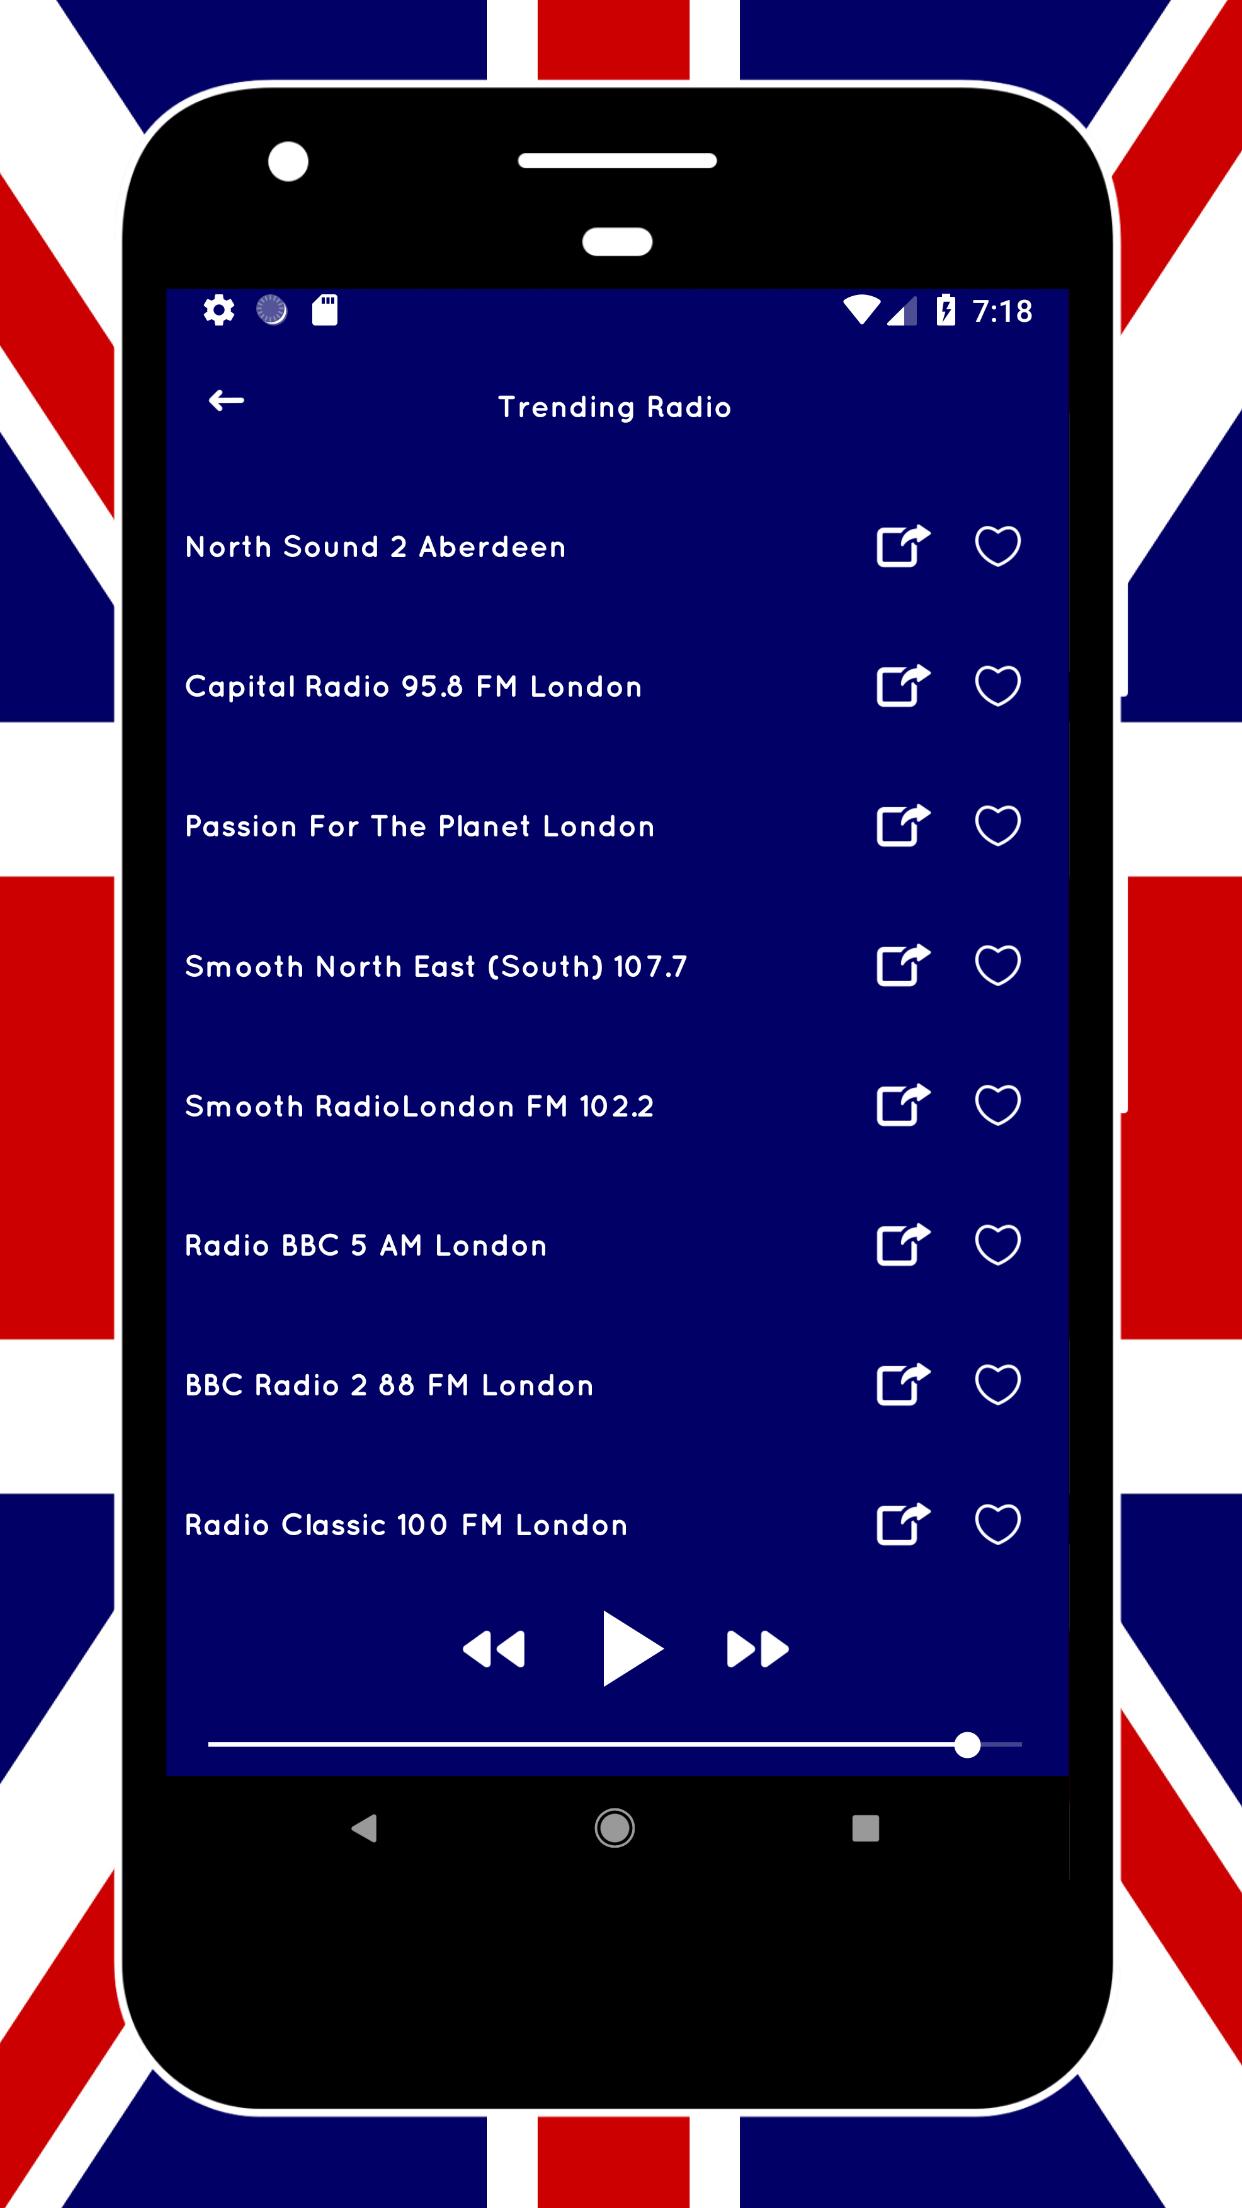 Radio UK - Online Radio + Internet Radio UK for Android - APK Download